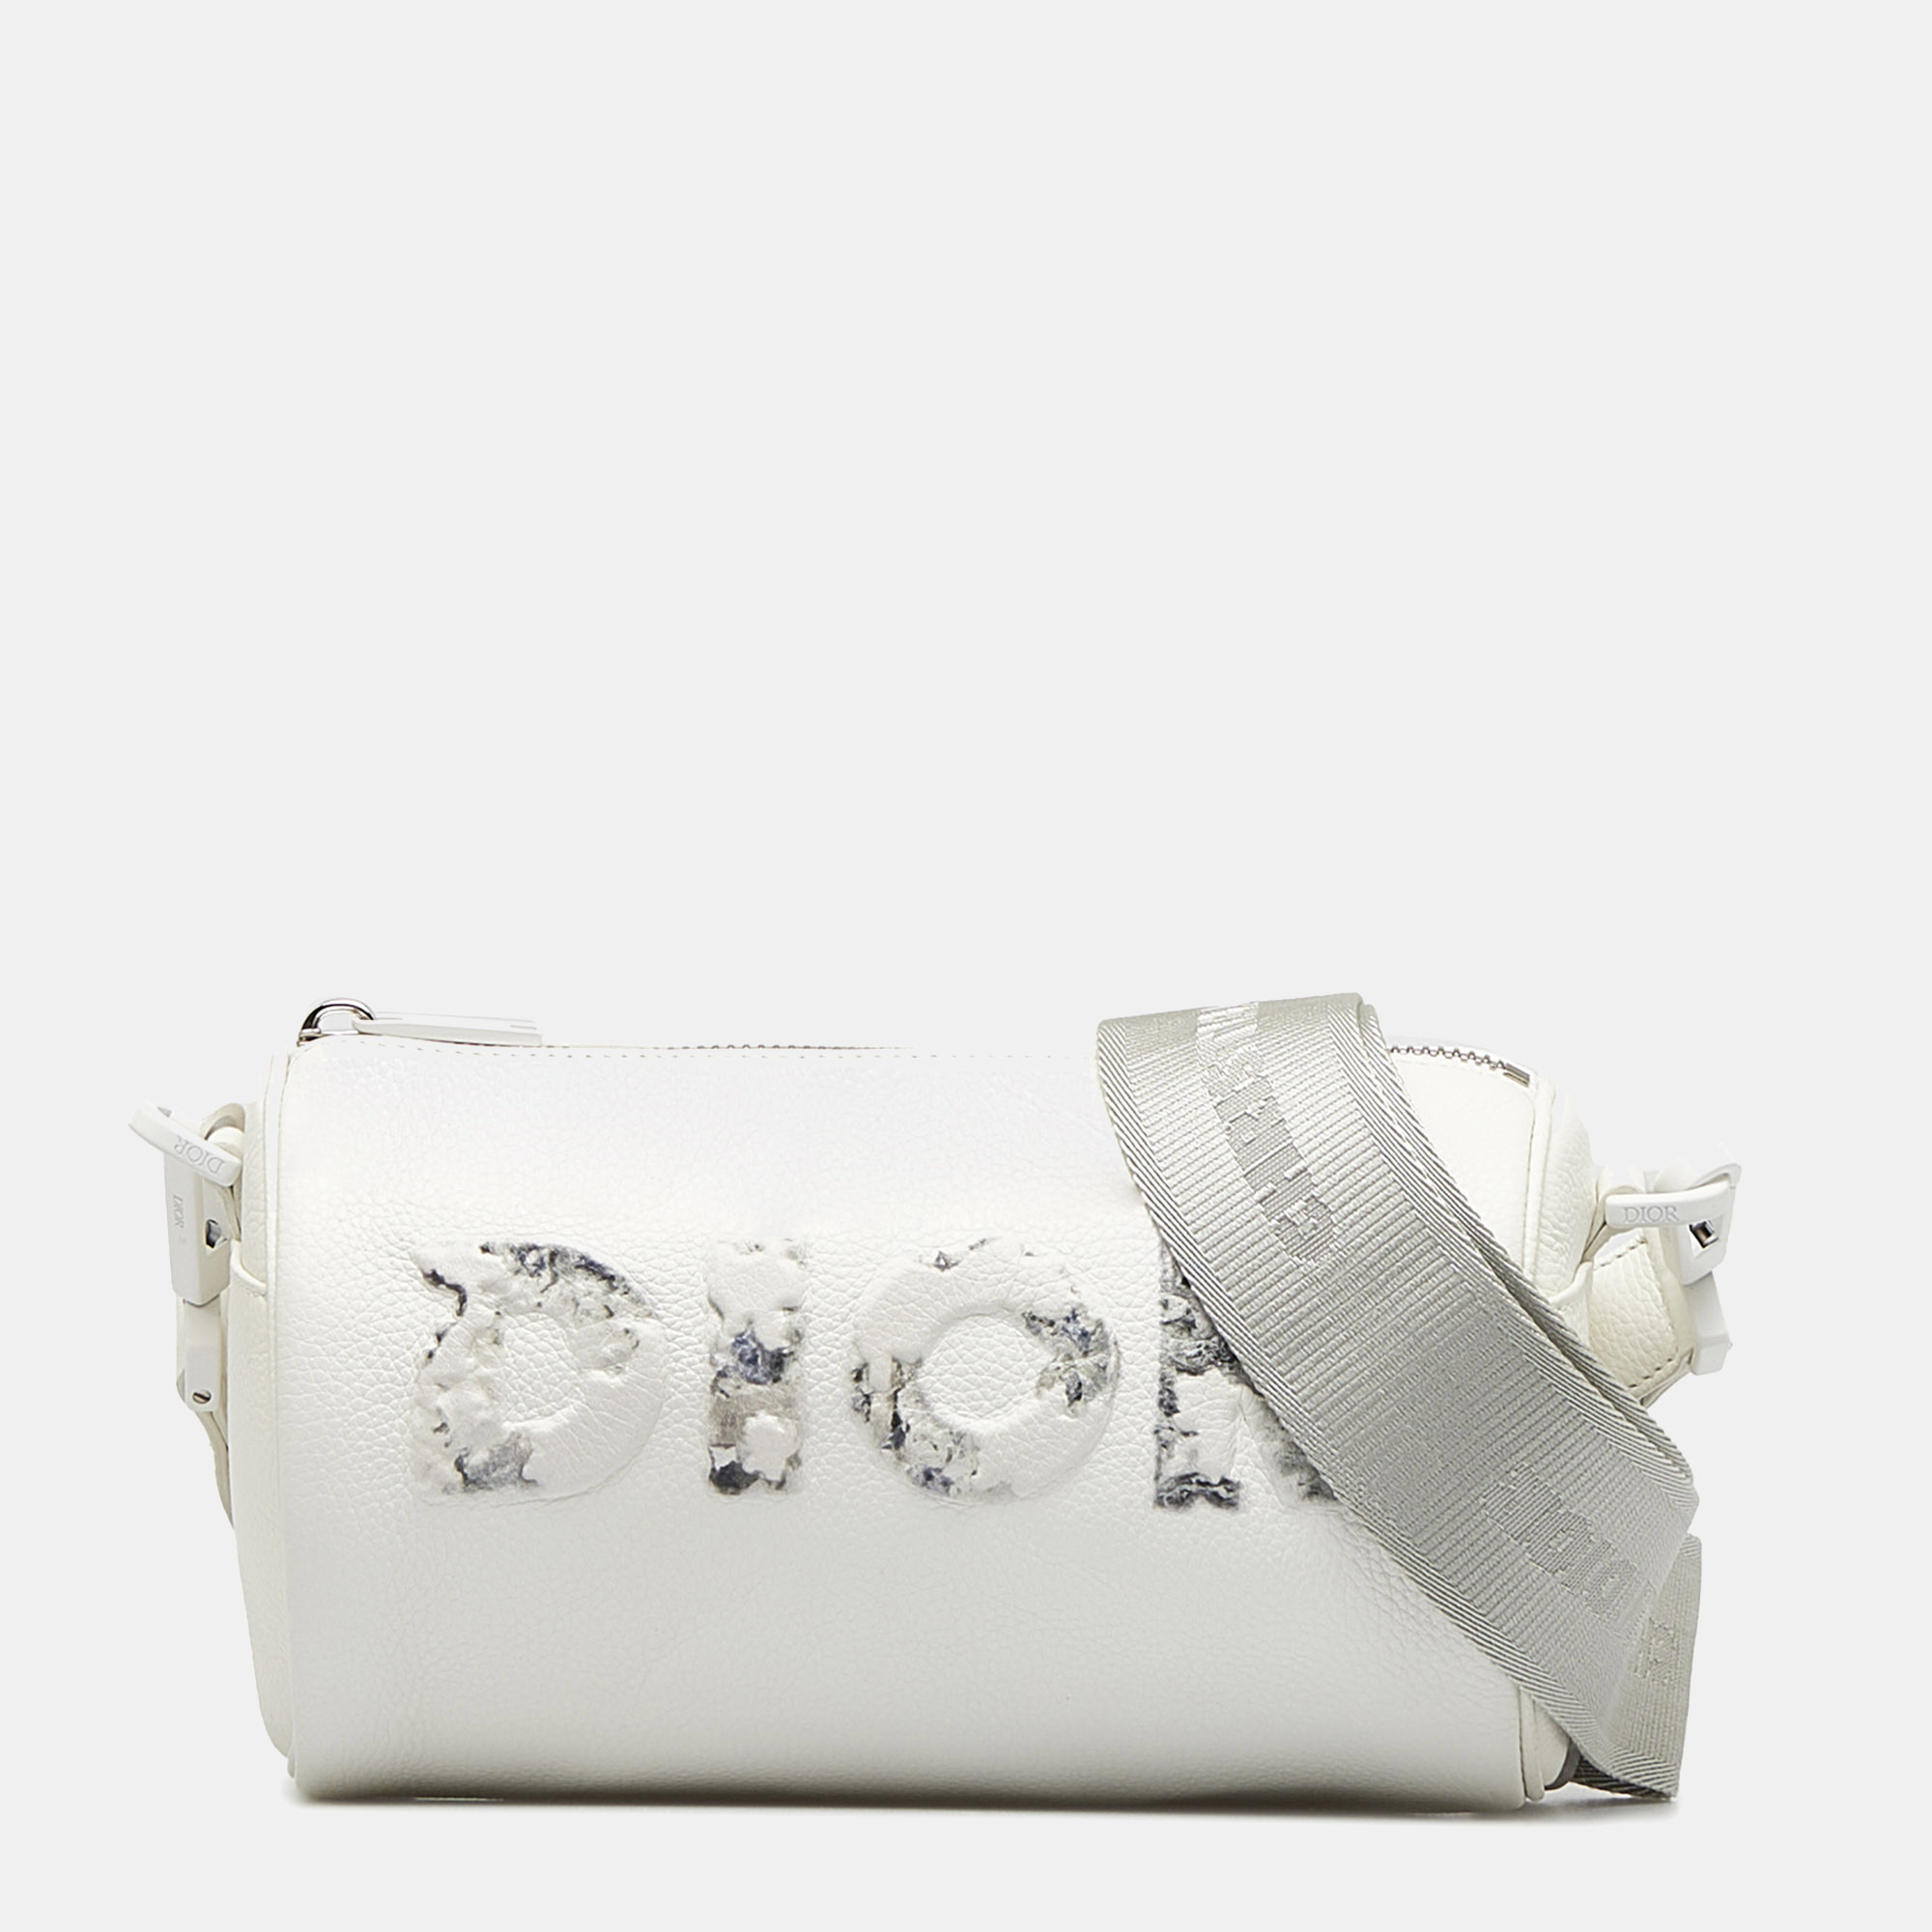 Dior x Daniel Arsham Roller Bag